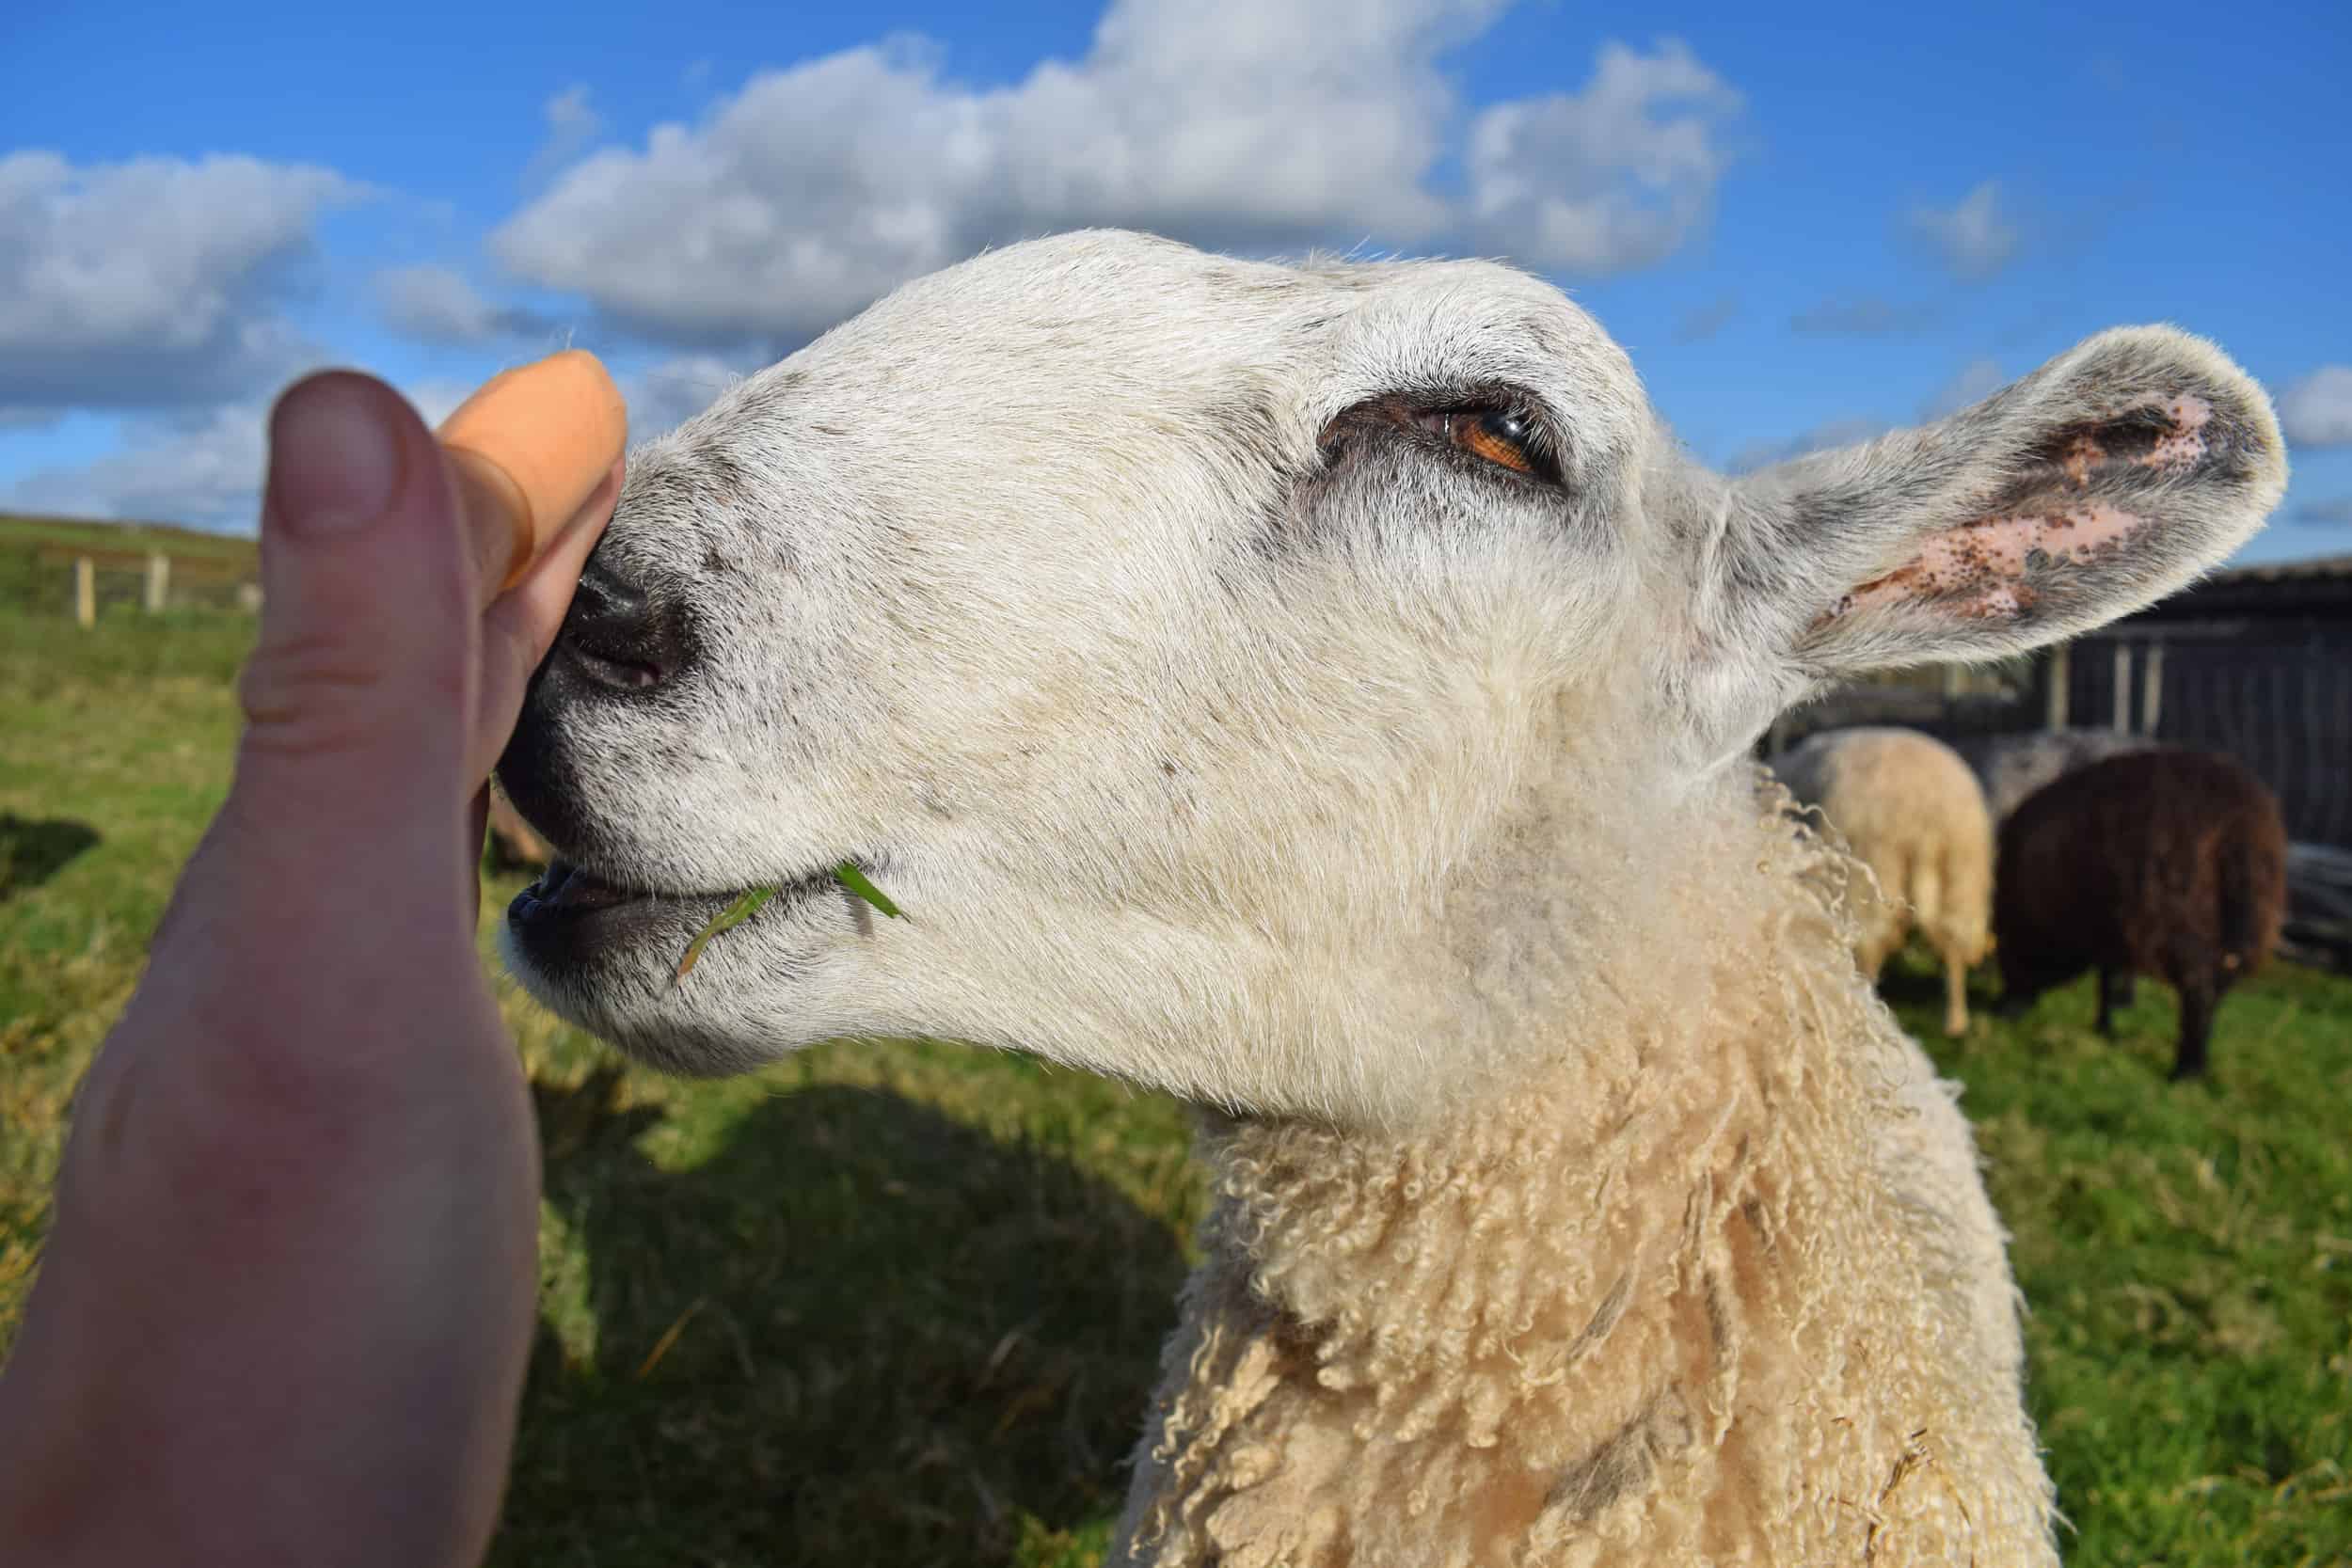 Lily bfl blueface leicester sheep ewe lamb pet bottle baby lamb roman nose